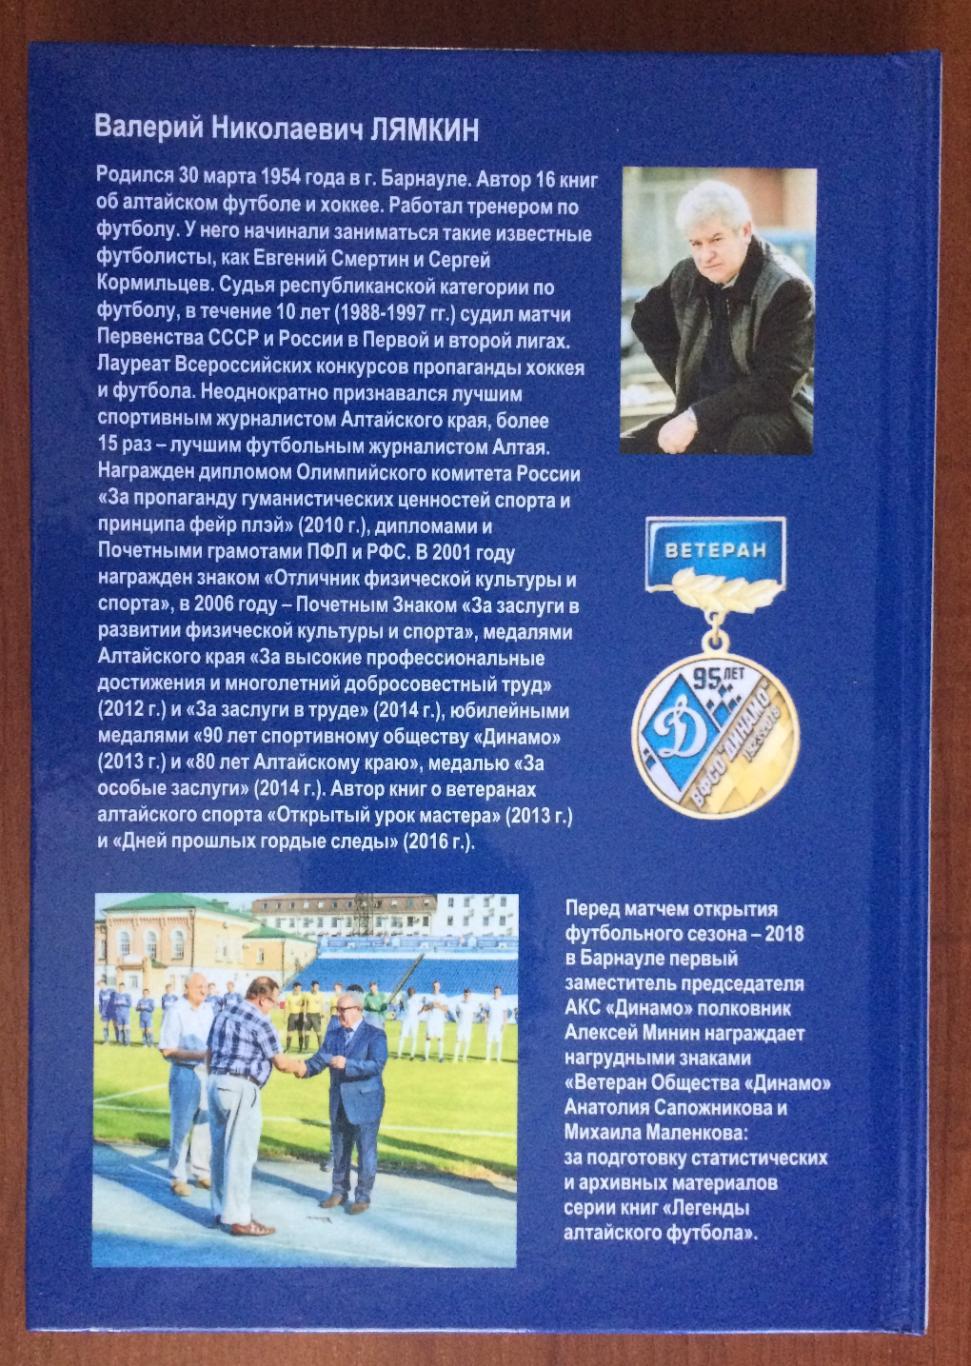 Легенды Алтайского футбола книга одиннадцатая 2018 год 1